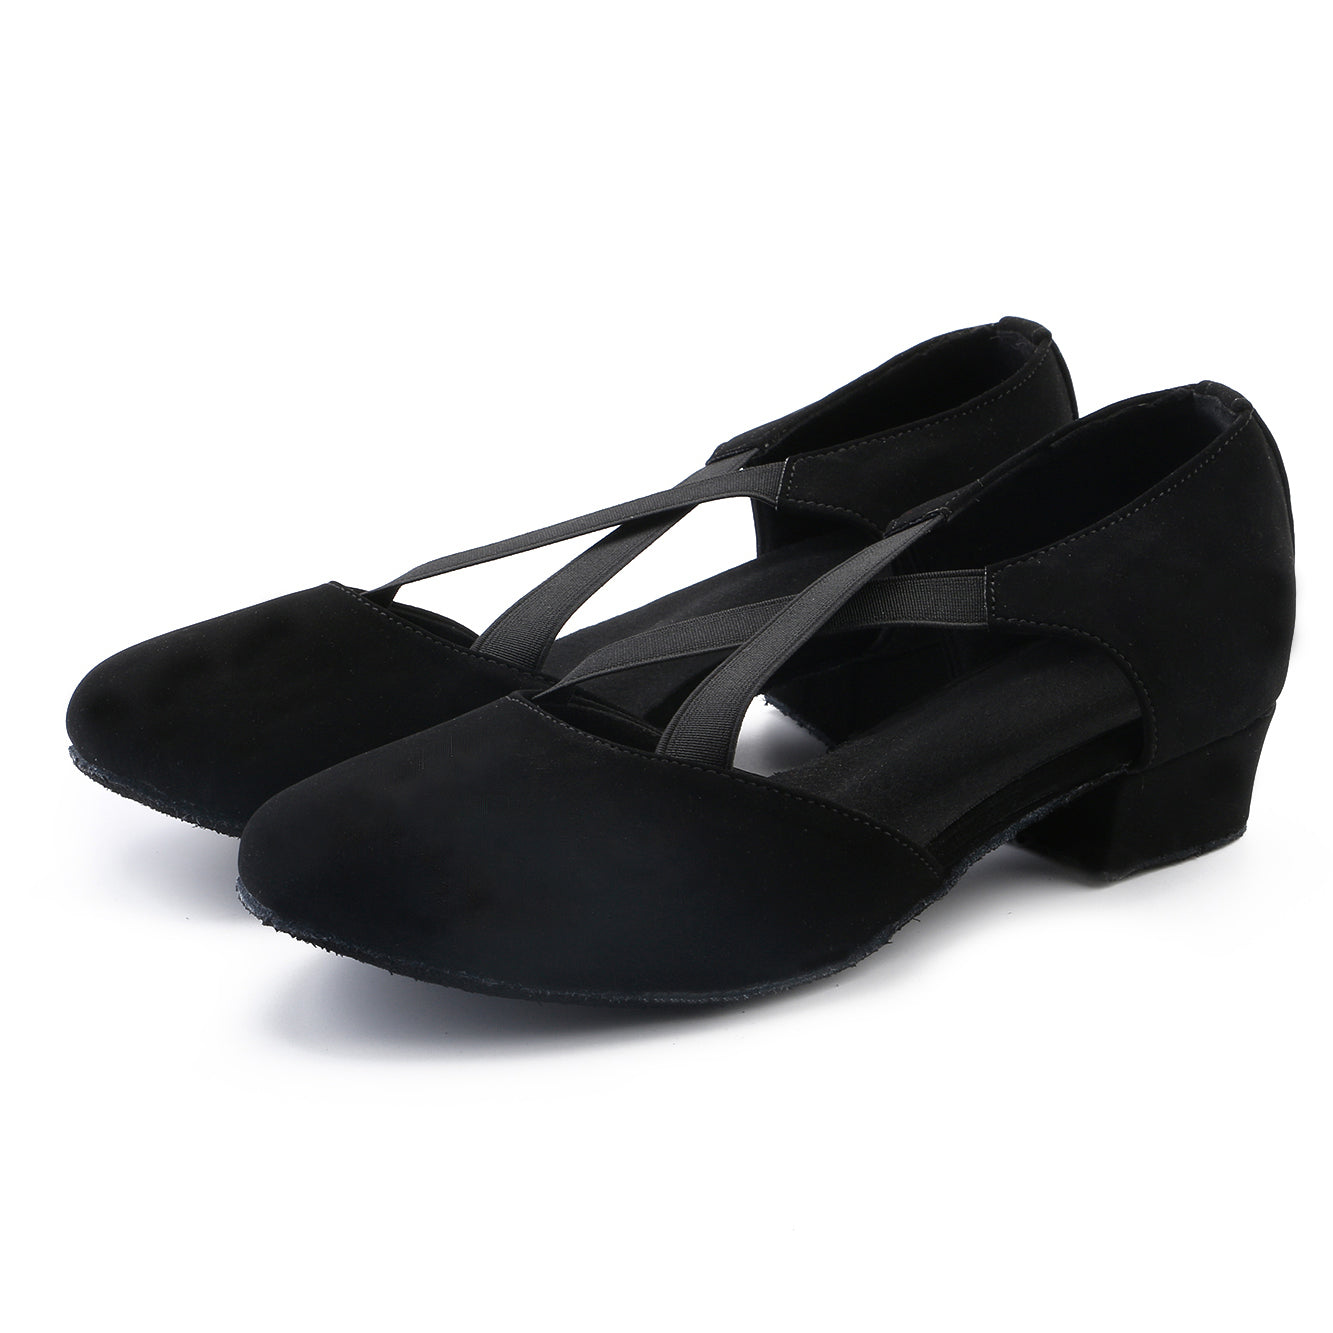 Low Heel Ballroom Dancing Shoes Ladies Tango Latin Practice Dance Shoe for Women Suede Sole Closed-toe Black (PD7307B)